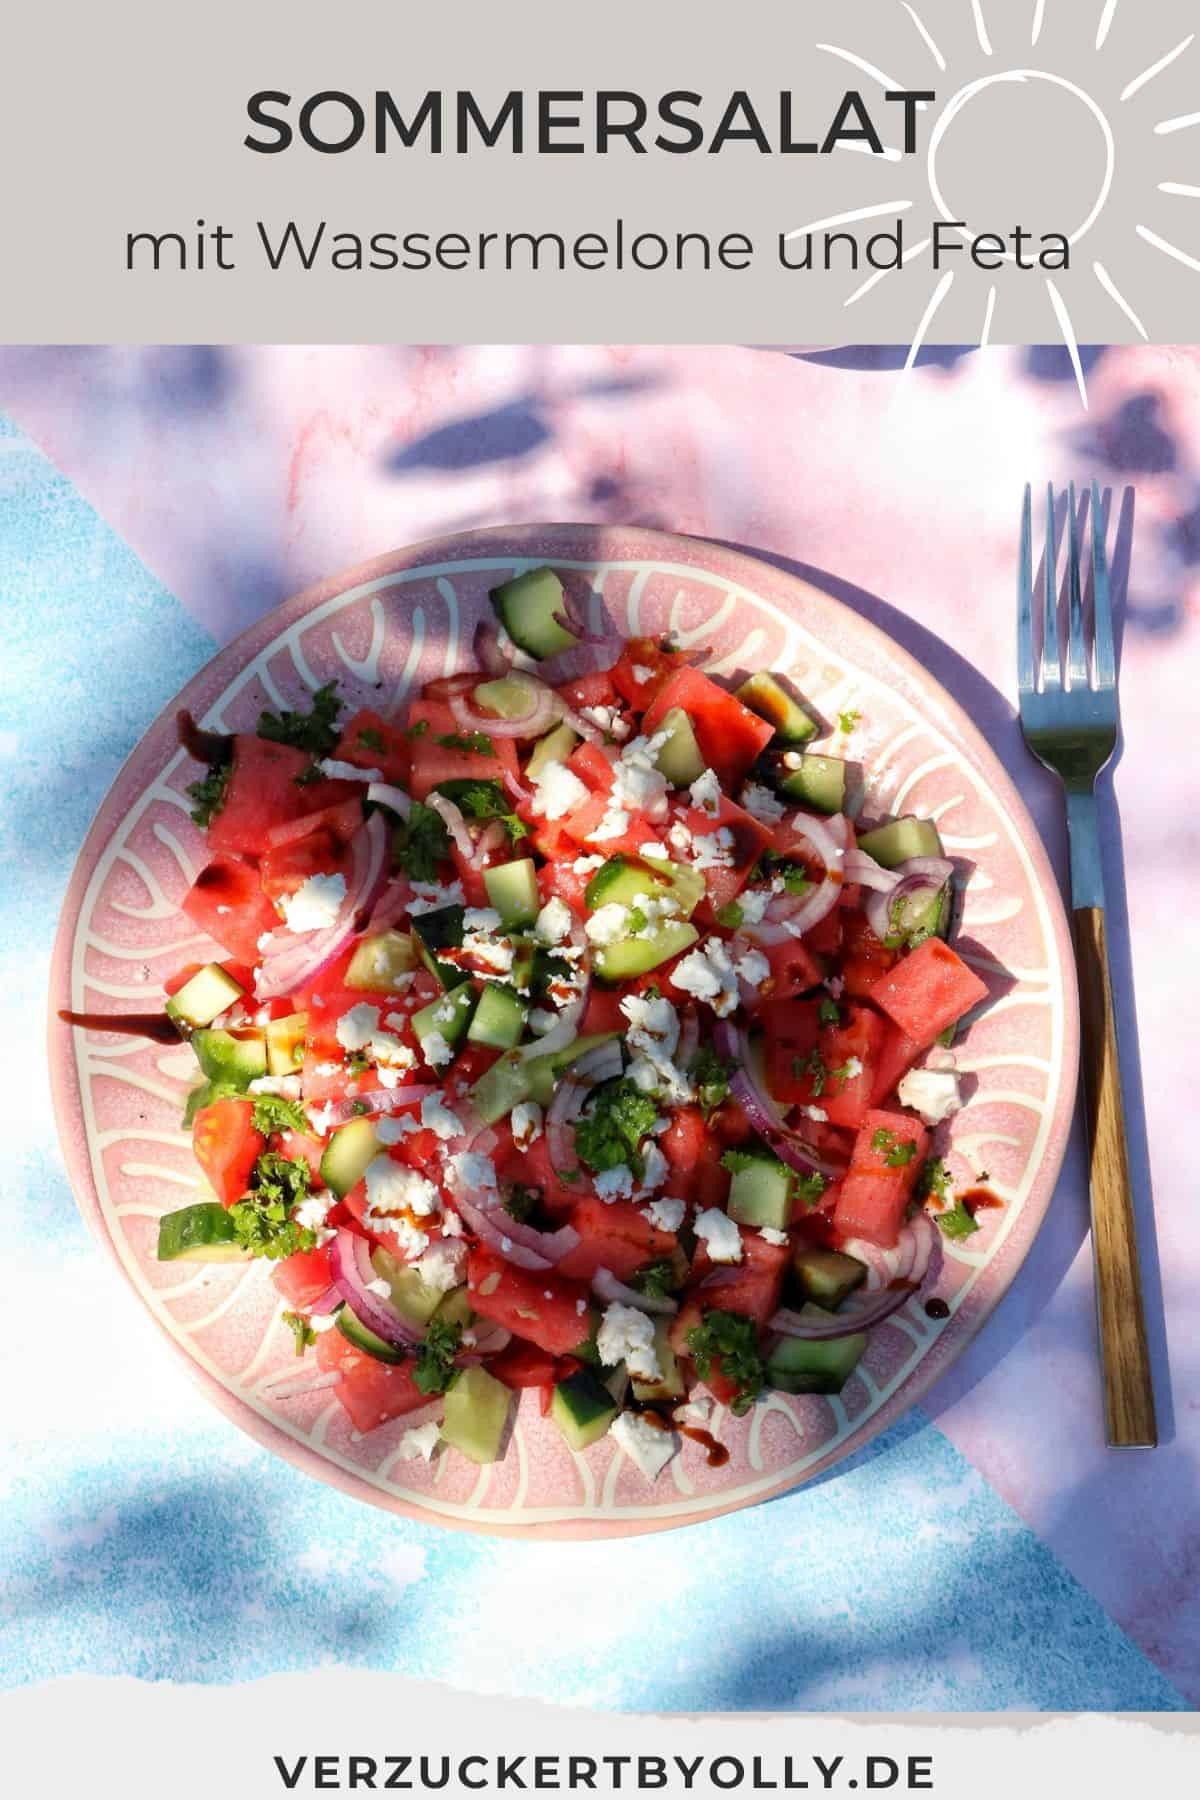 Pin zu Pinterest: Wassermelonensalat mit Feta